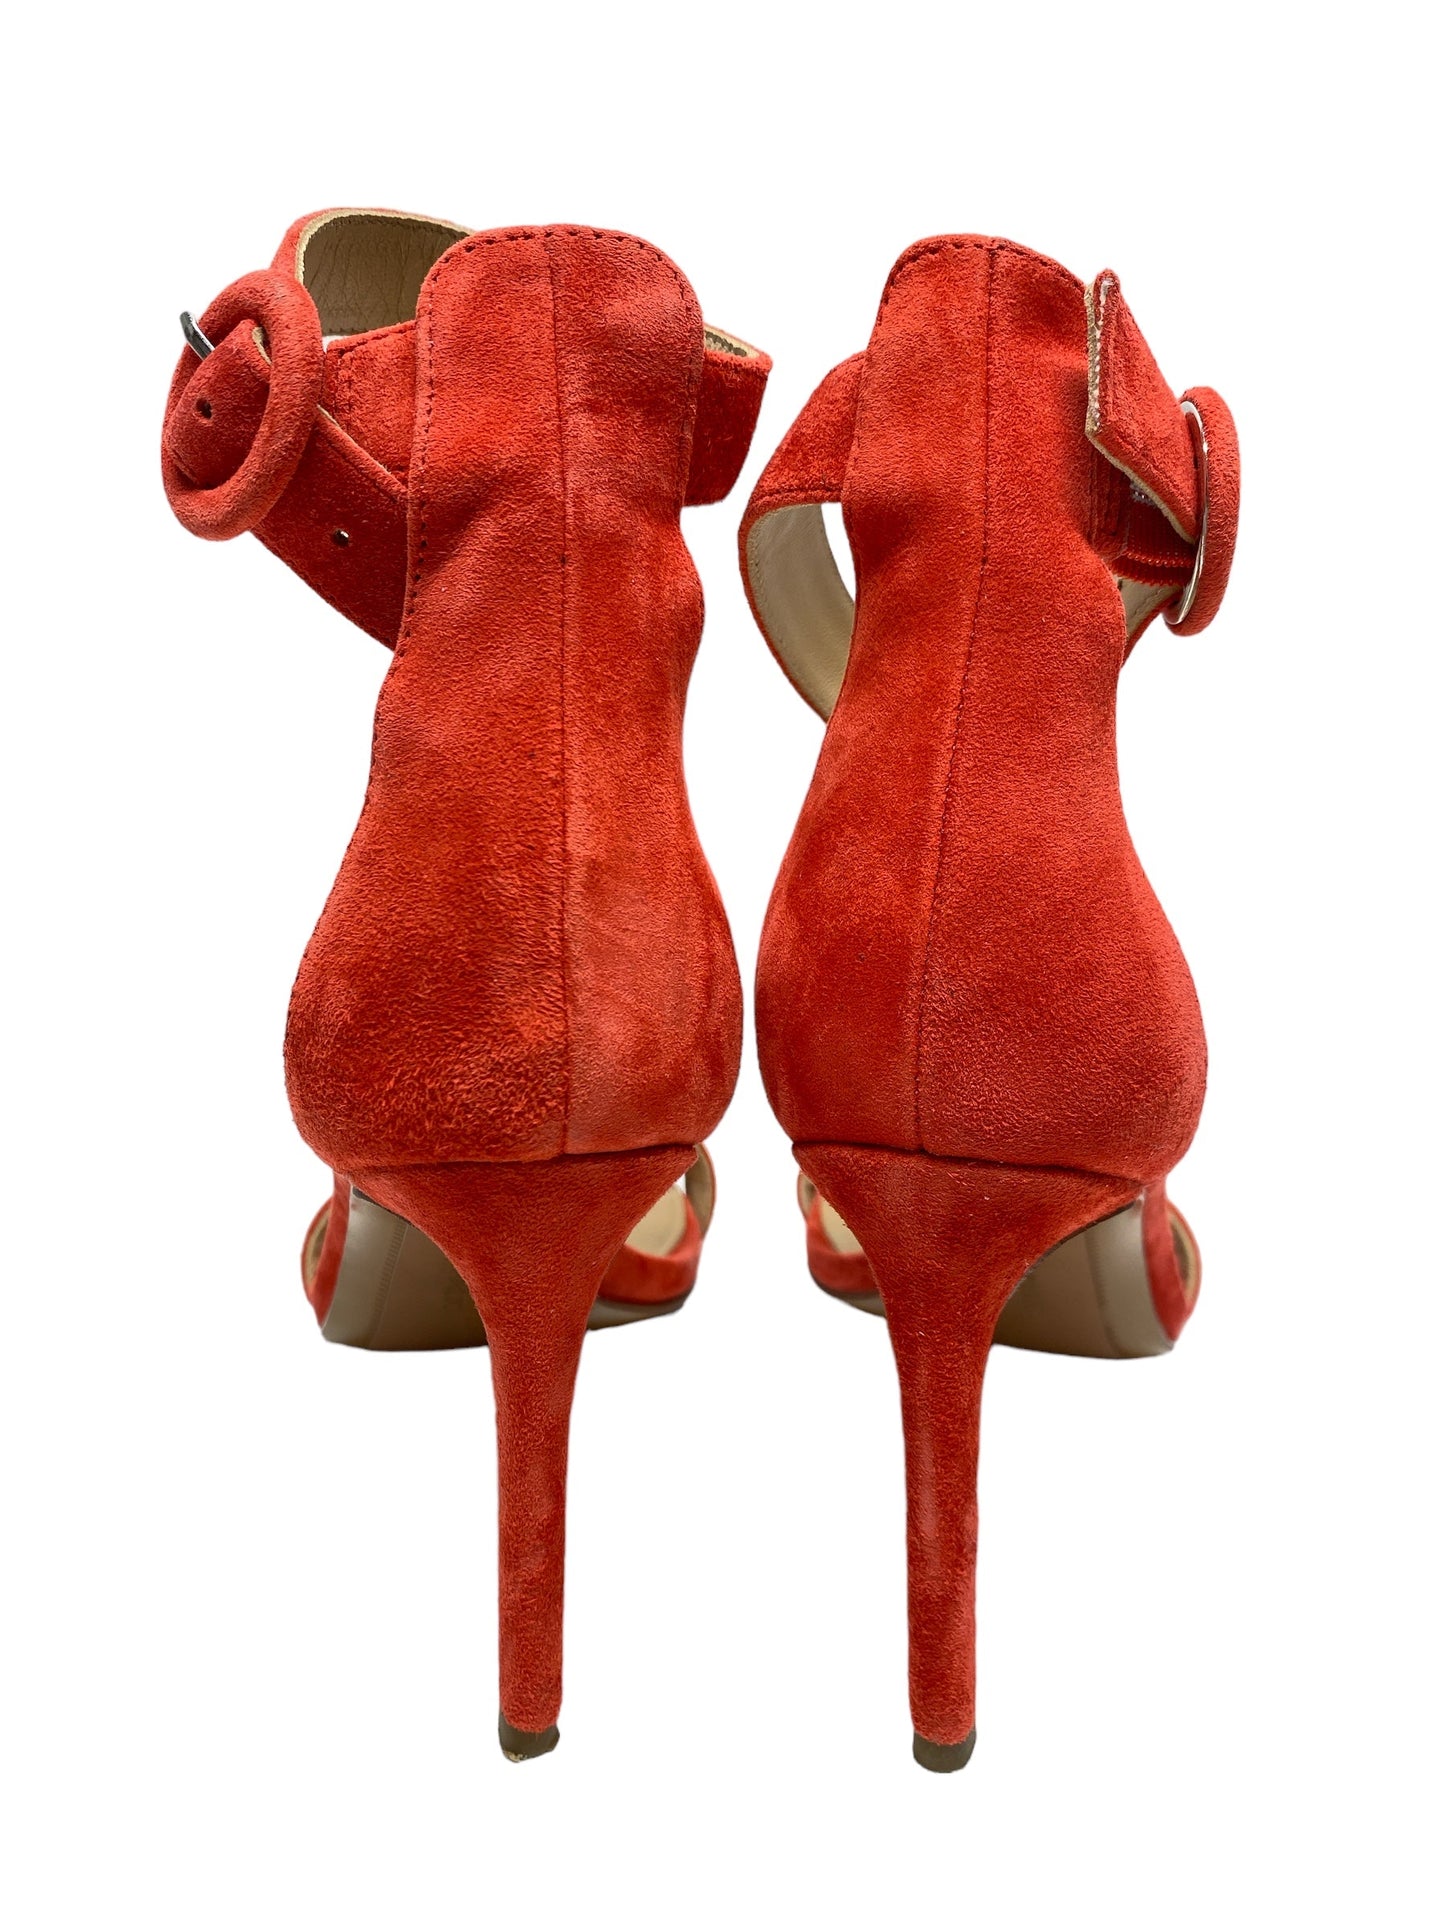 Red Sandals Heels Stiletto Banana Republic, Size 8